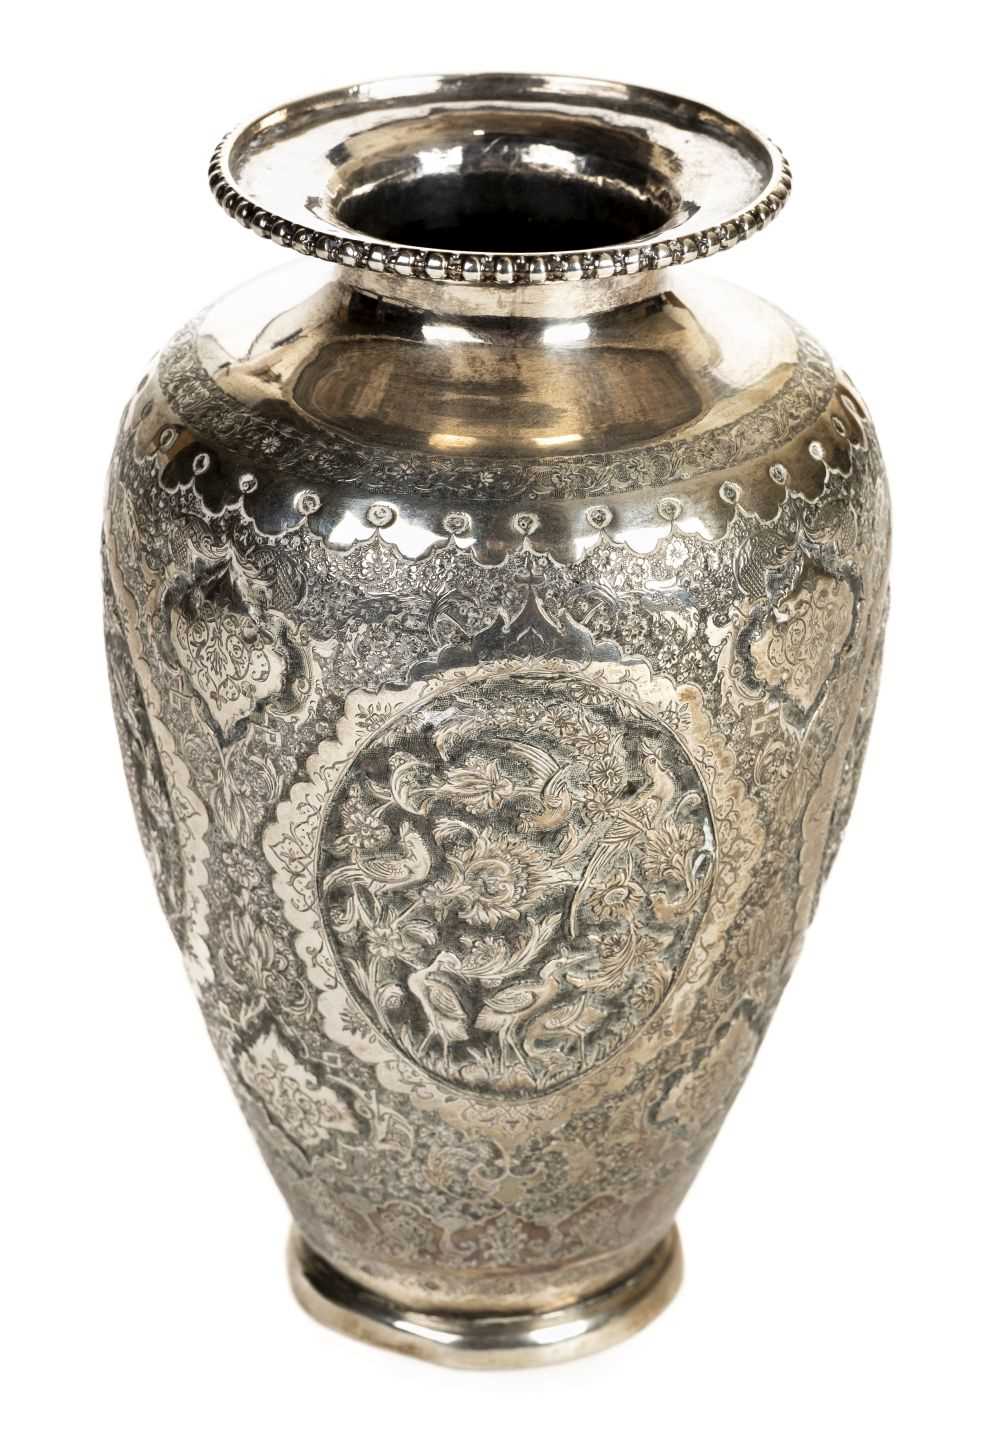 Lot 100 - Vase. A 19th century Indian white metal vase